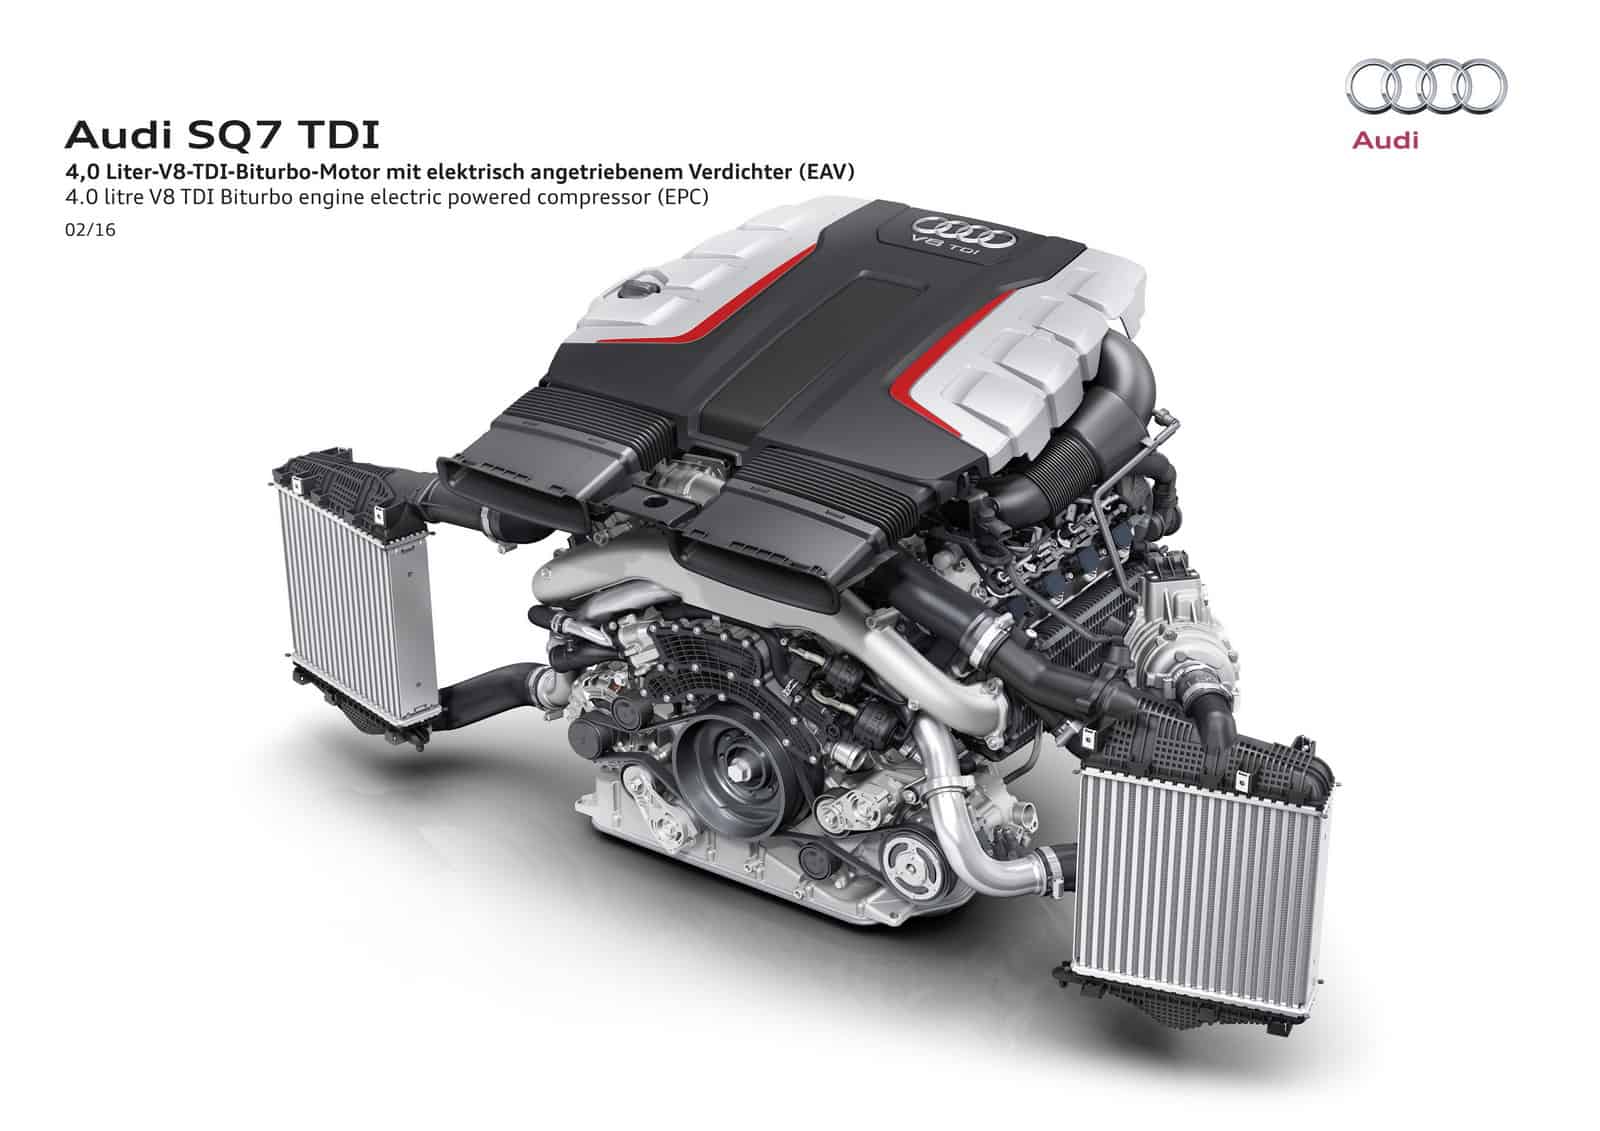 4.0 litre V8 TDI Biturbo engine electric powered compressor (EPC)